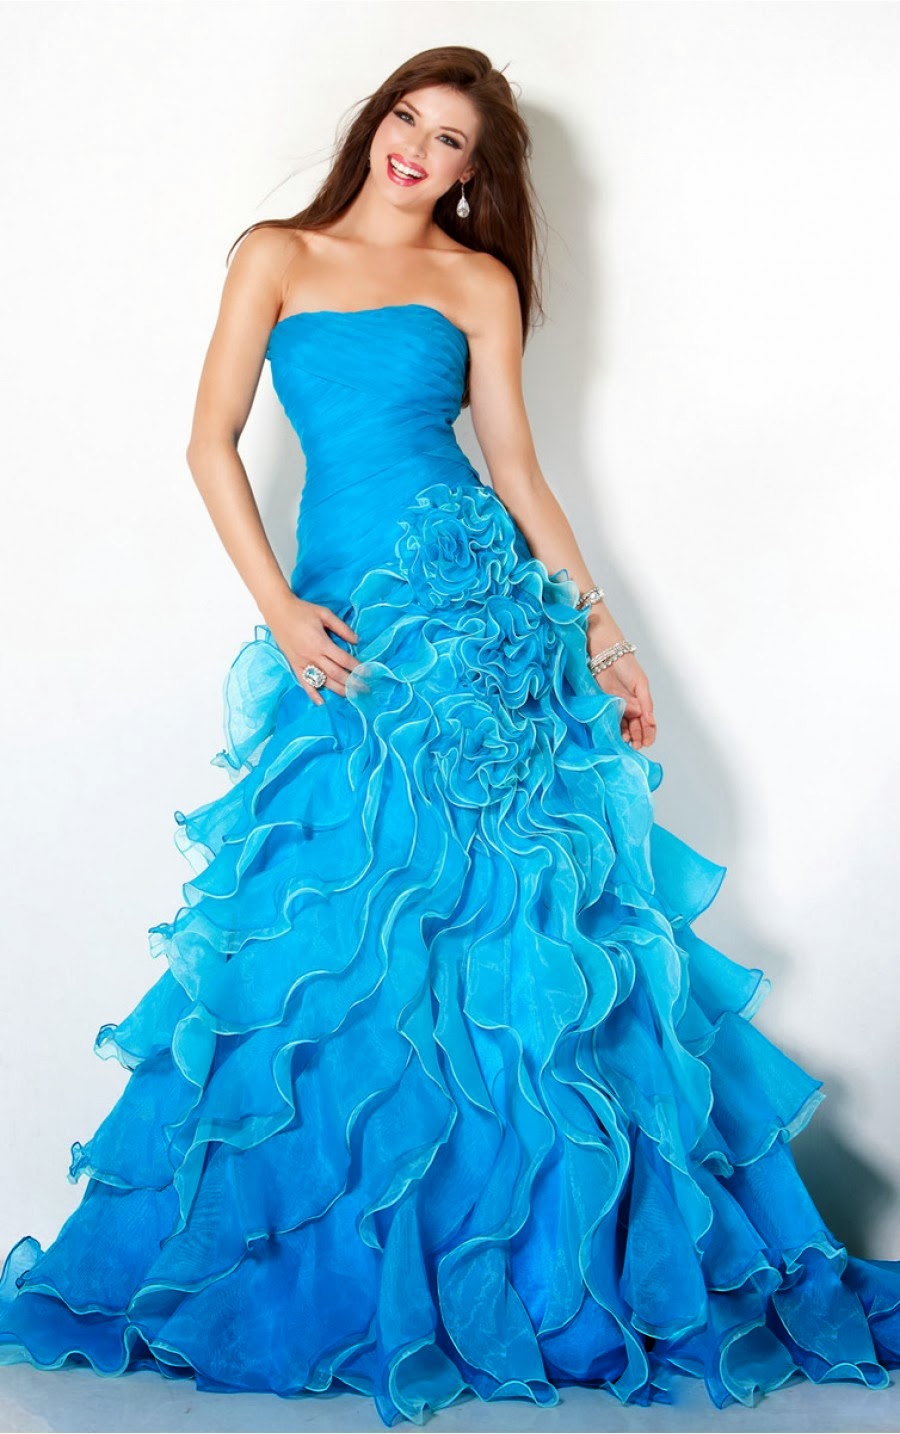 Malibu Blue Dresses 9